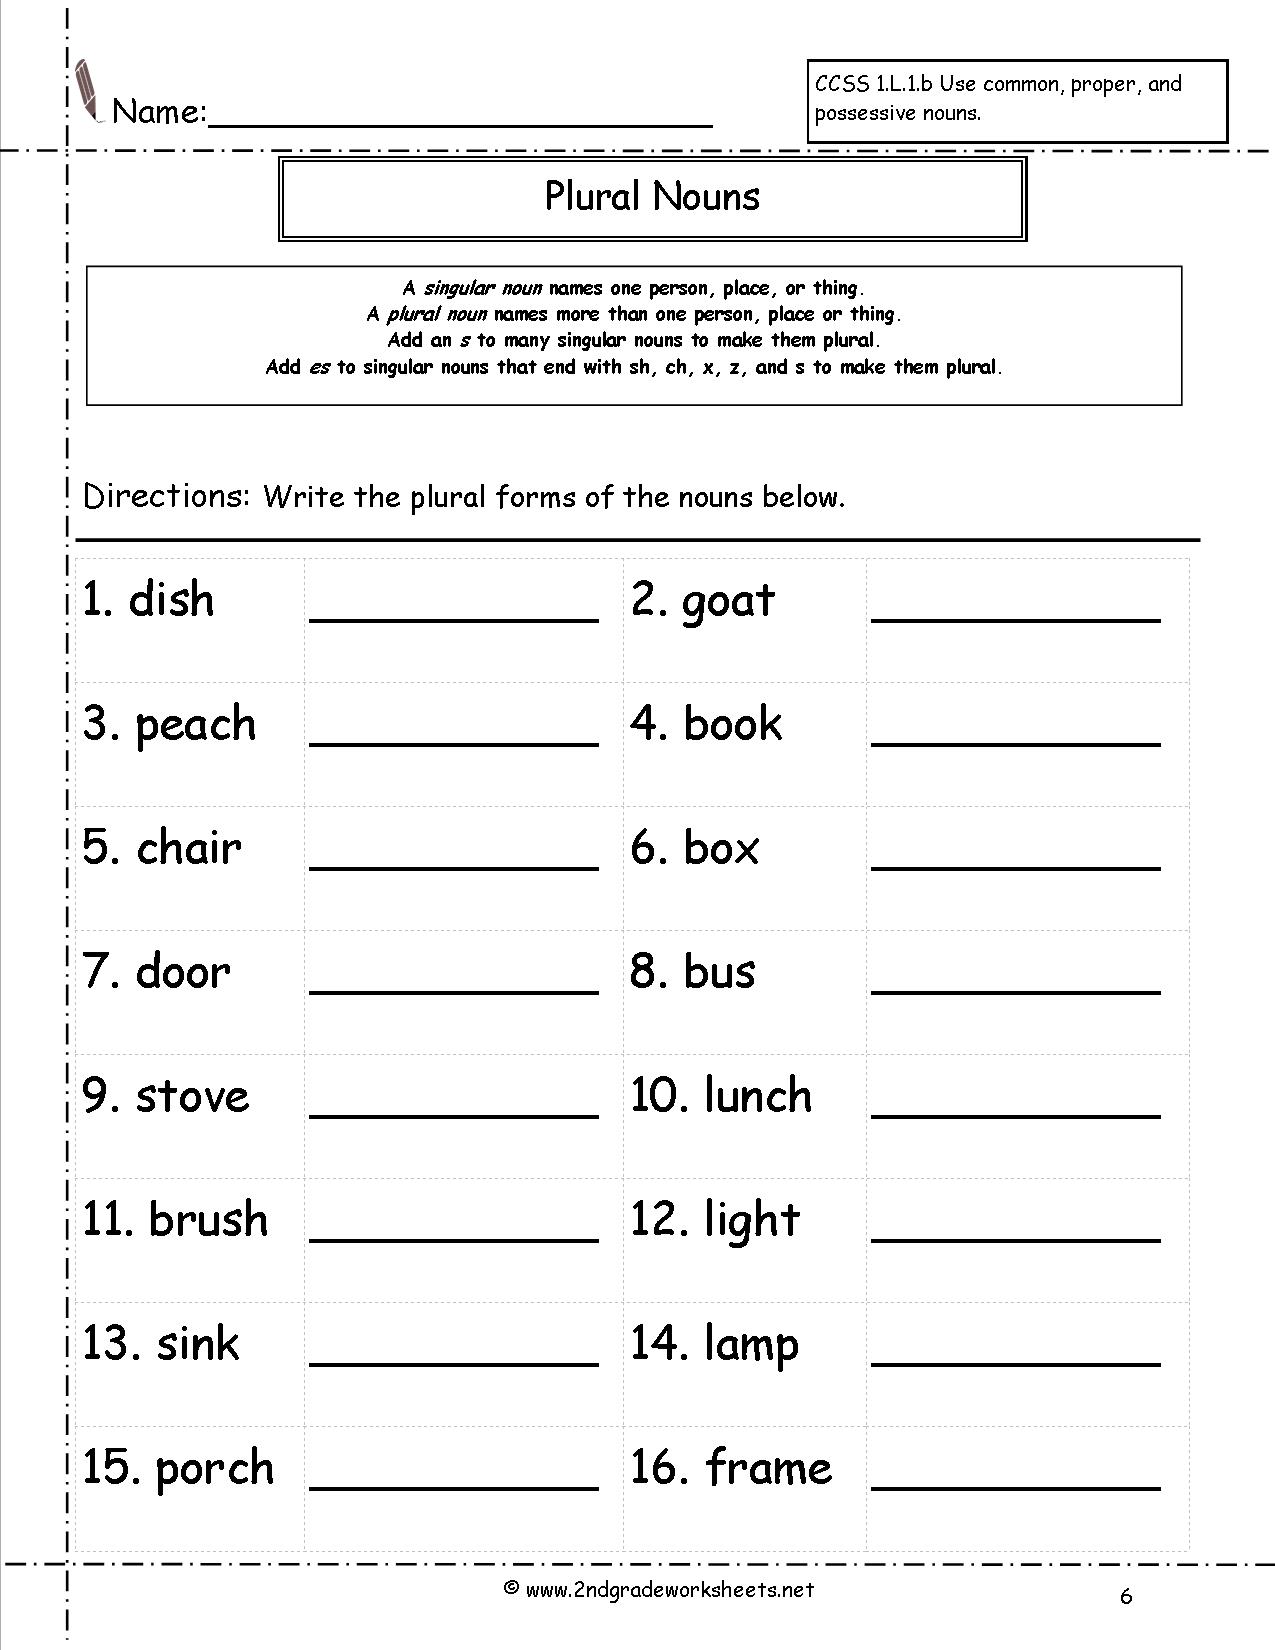 Singular and Plural Nouns Worksheets Grade 1 Image